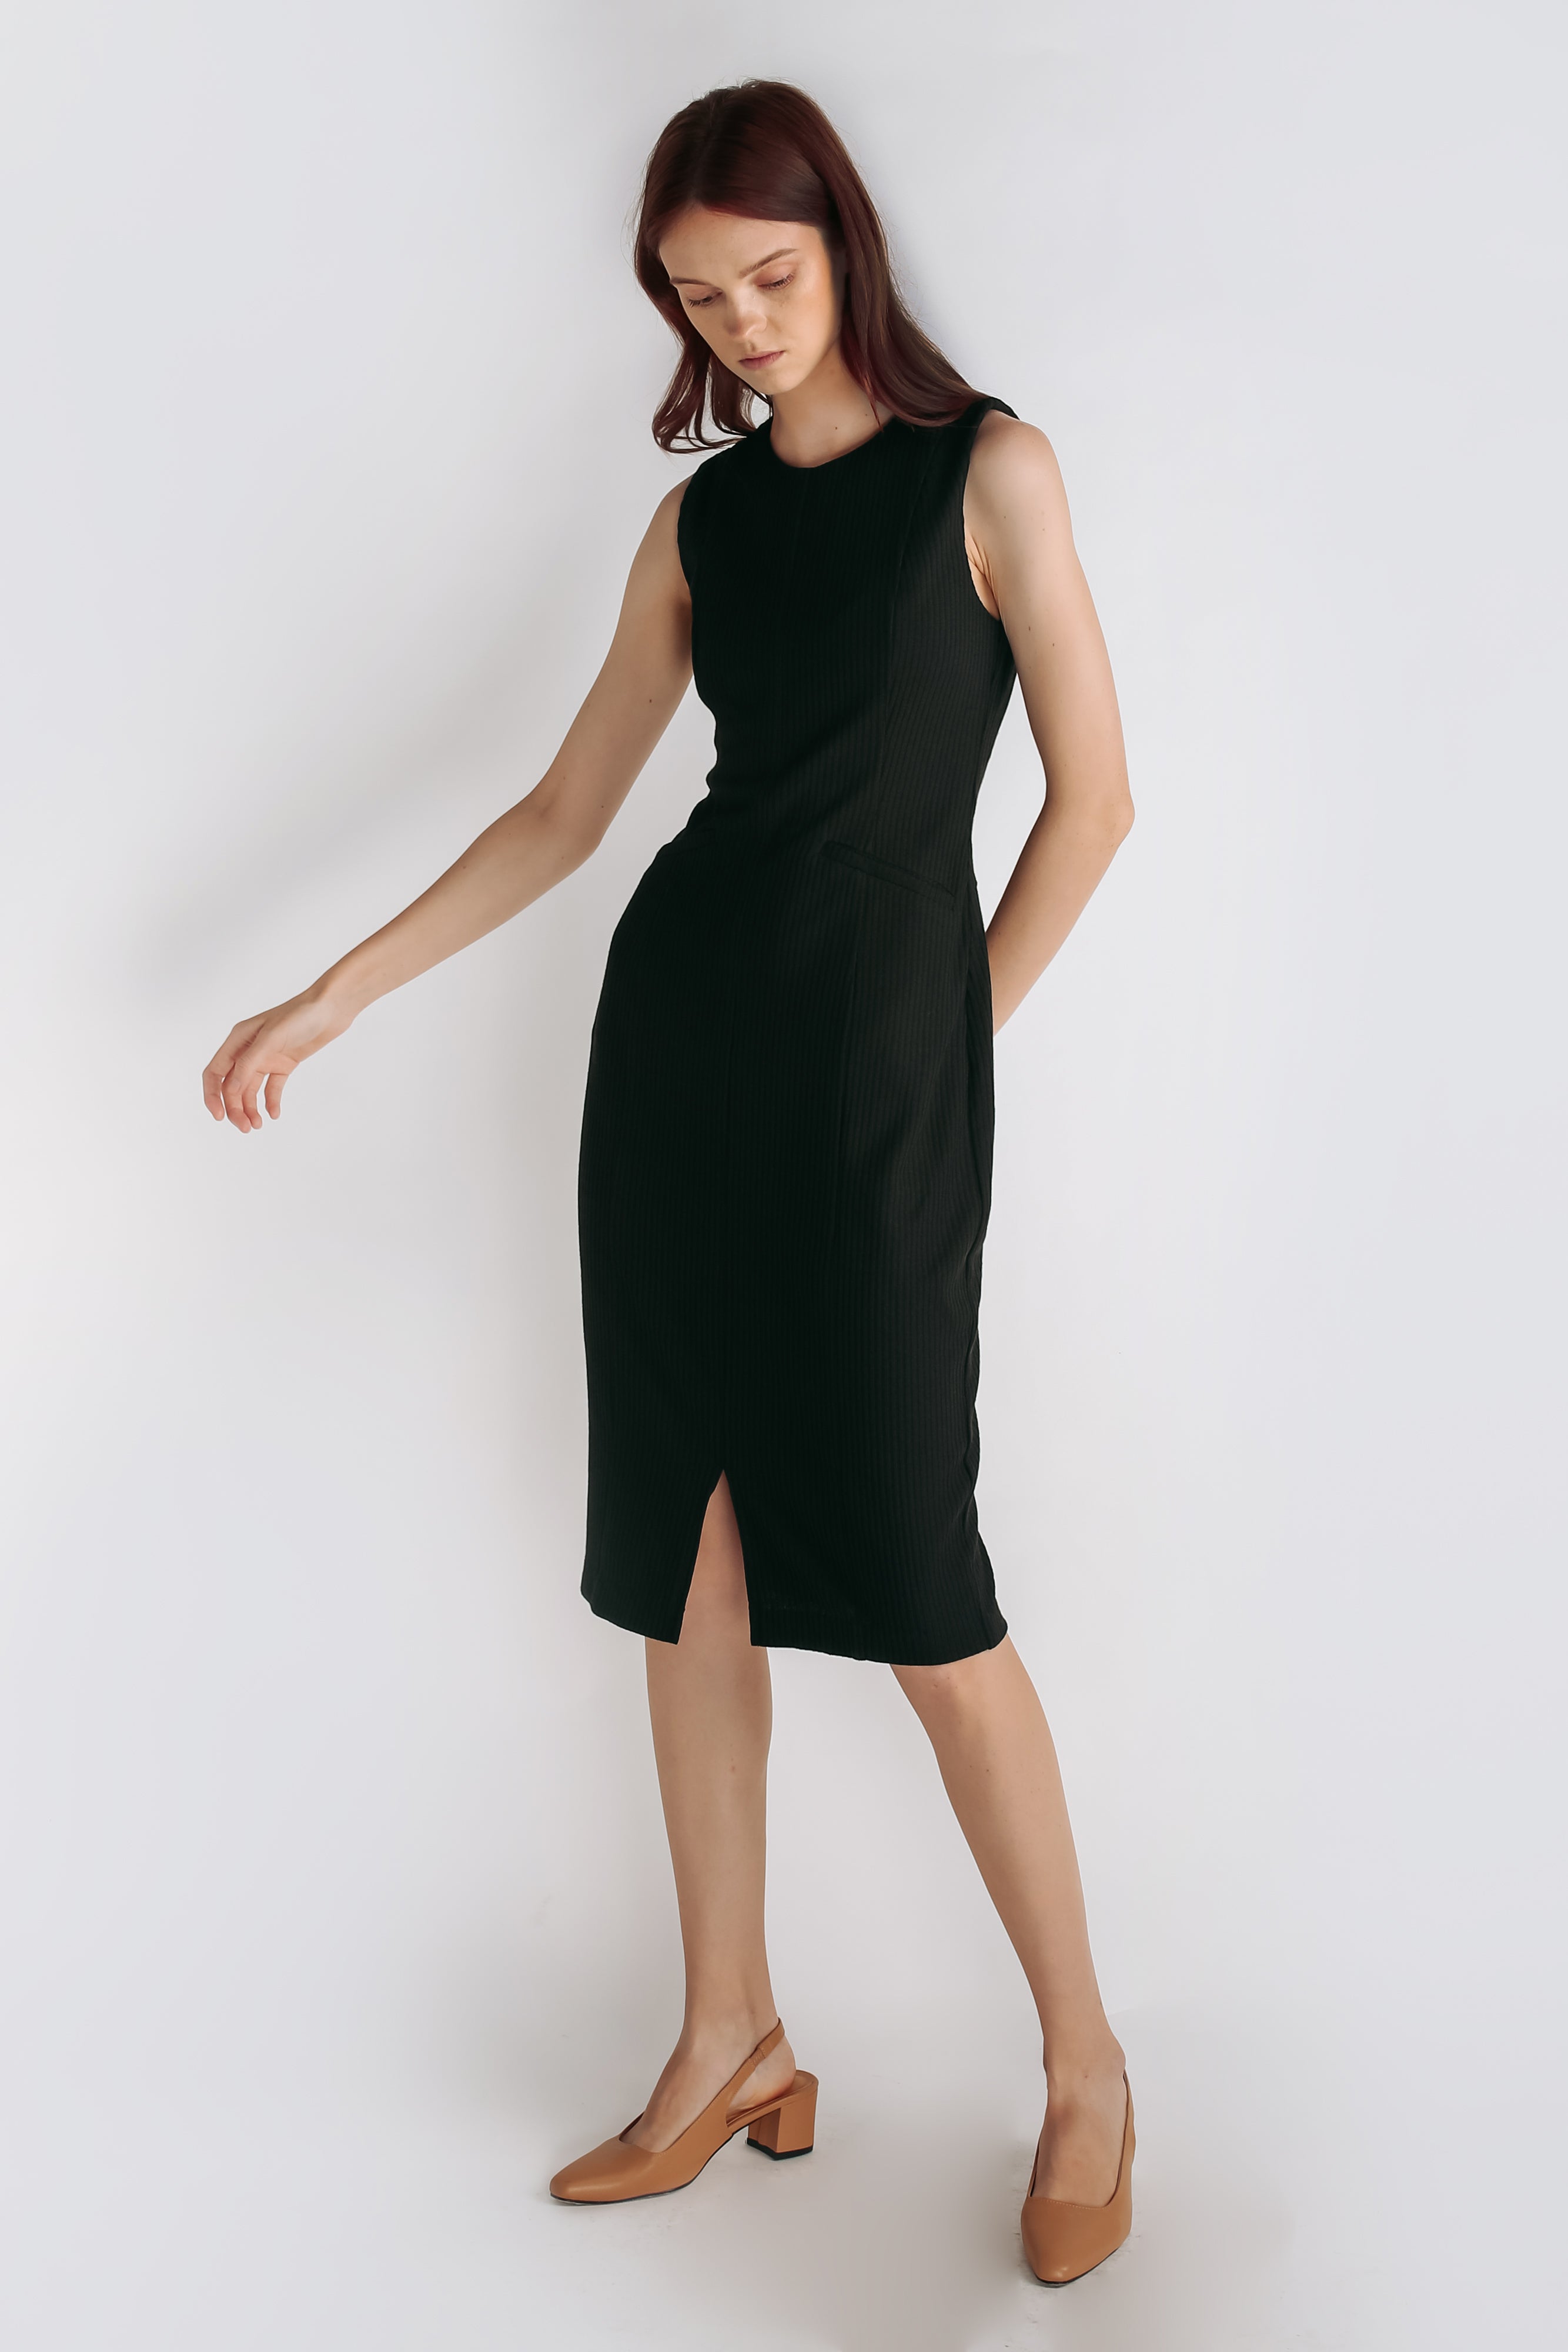 Textured Knit Sleeveless Dress In Black